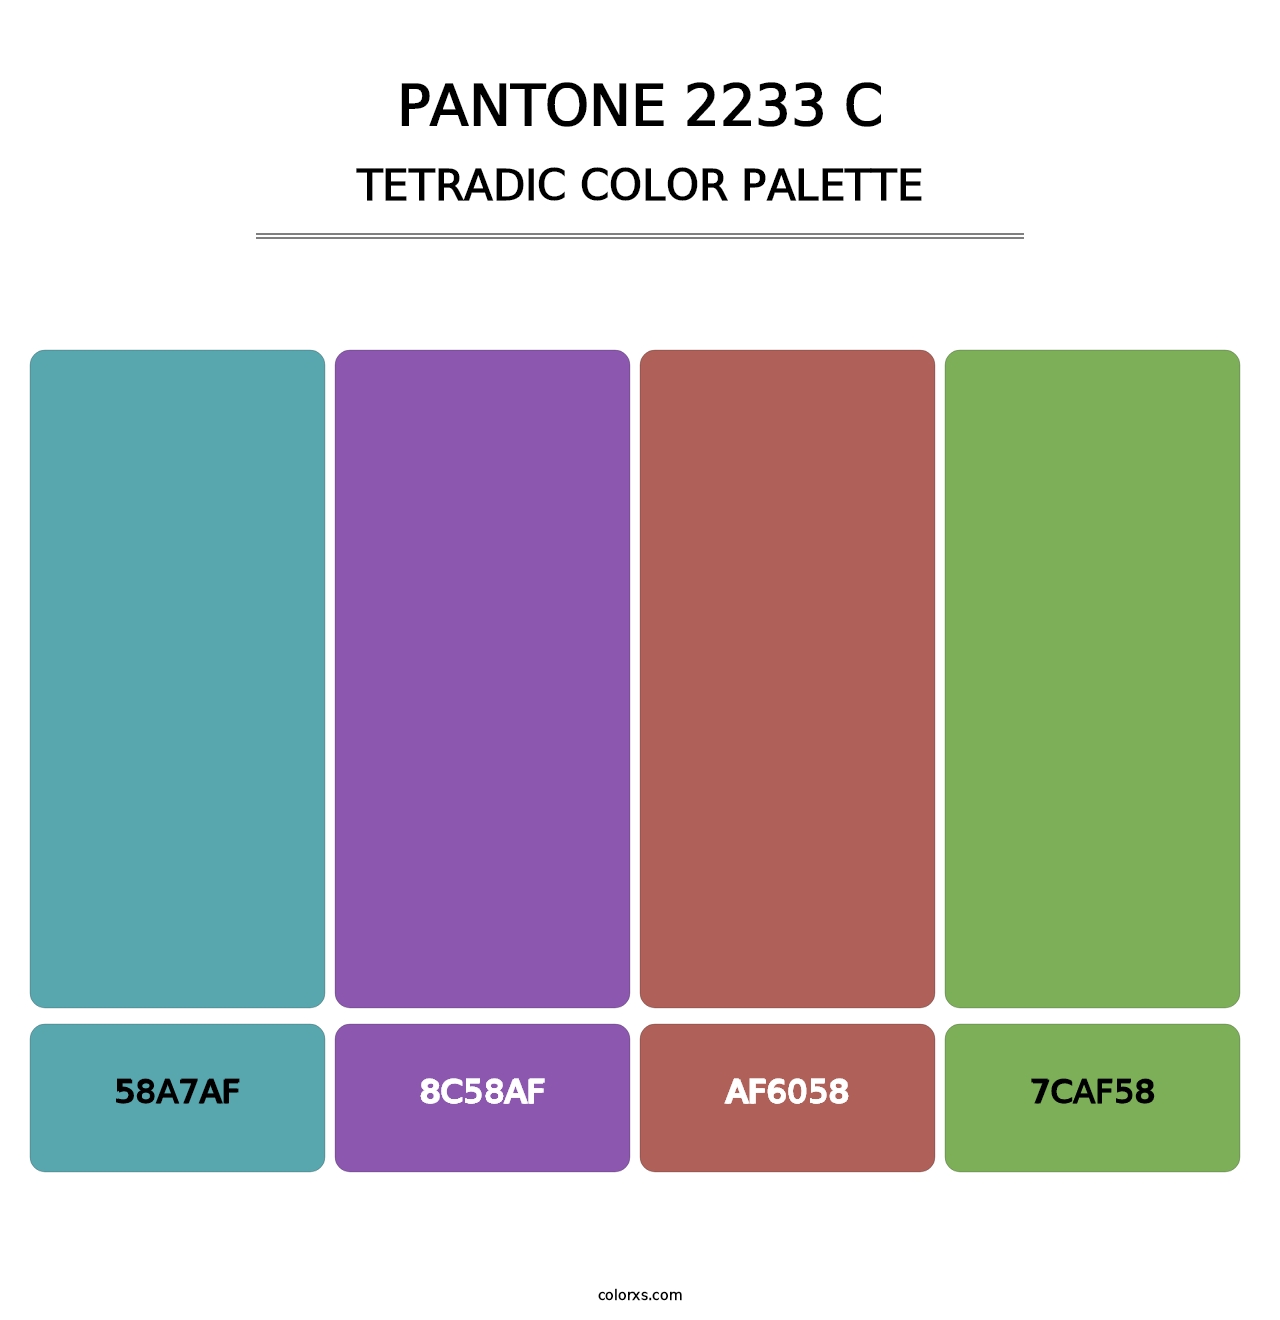 PANTONE 2233 C - Tetradic Color Palette